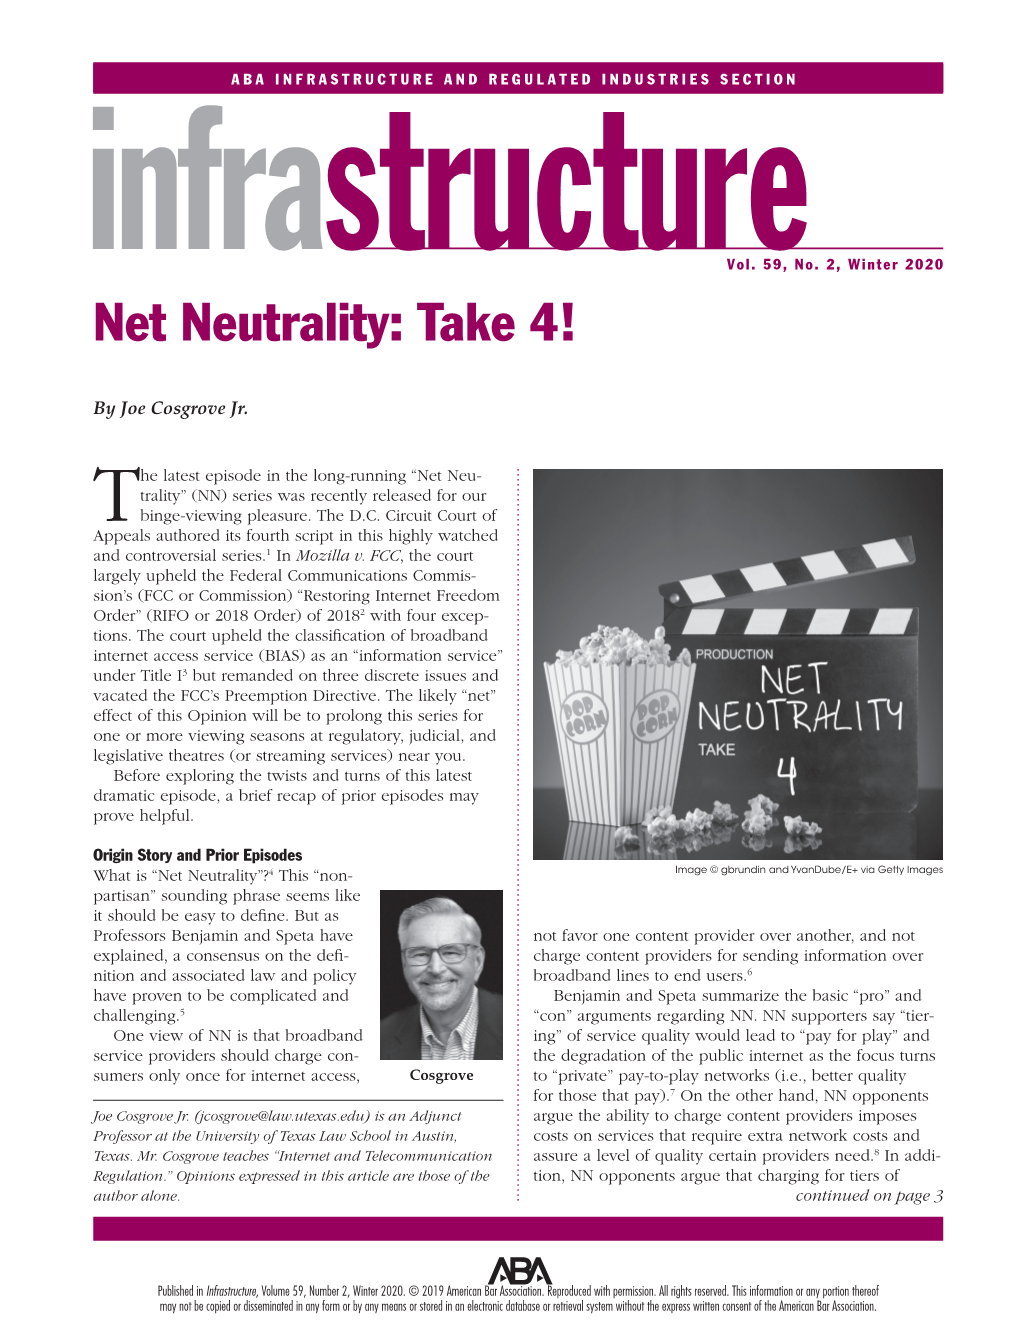 Net Neutrality: Take 4!